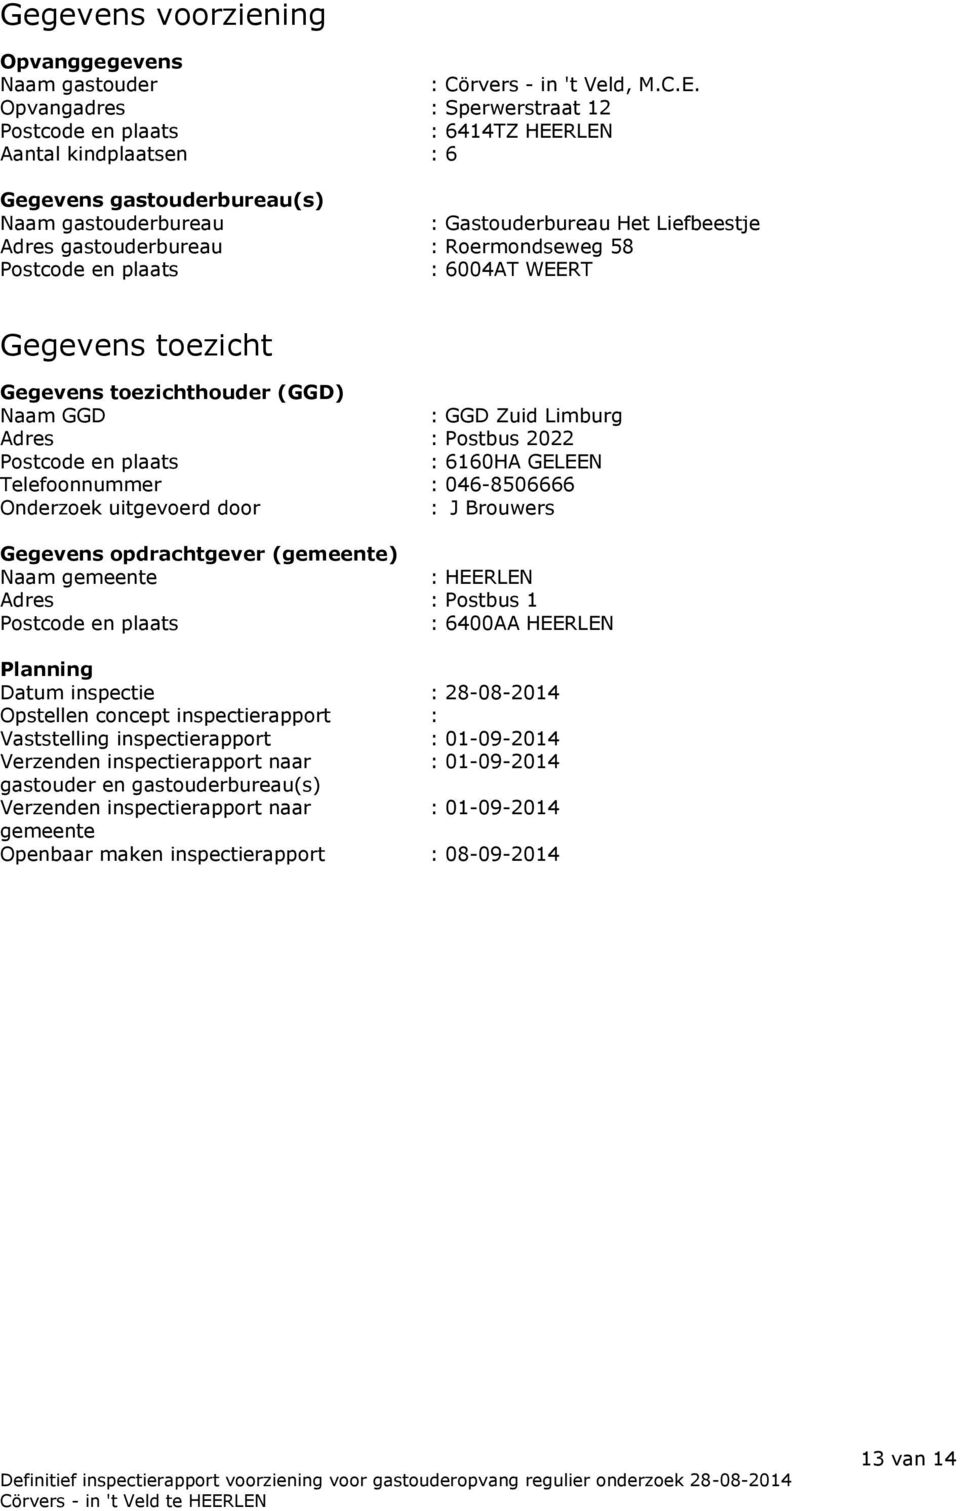 Roermondseweg 58 Postcode en plaats : 6004AT WEERT Gegevens toezicht Gegevens toezichthouder (GGD) Naam GGD : GGD Zuid Limburg Adres : Postbus 2022 Postcode en plaats : 6160HA GELEEN Telefoonnummer :